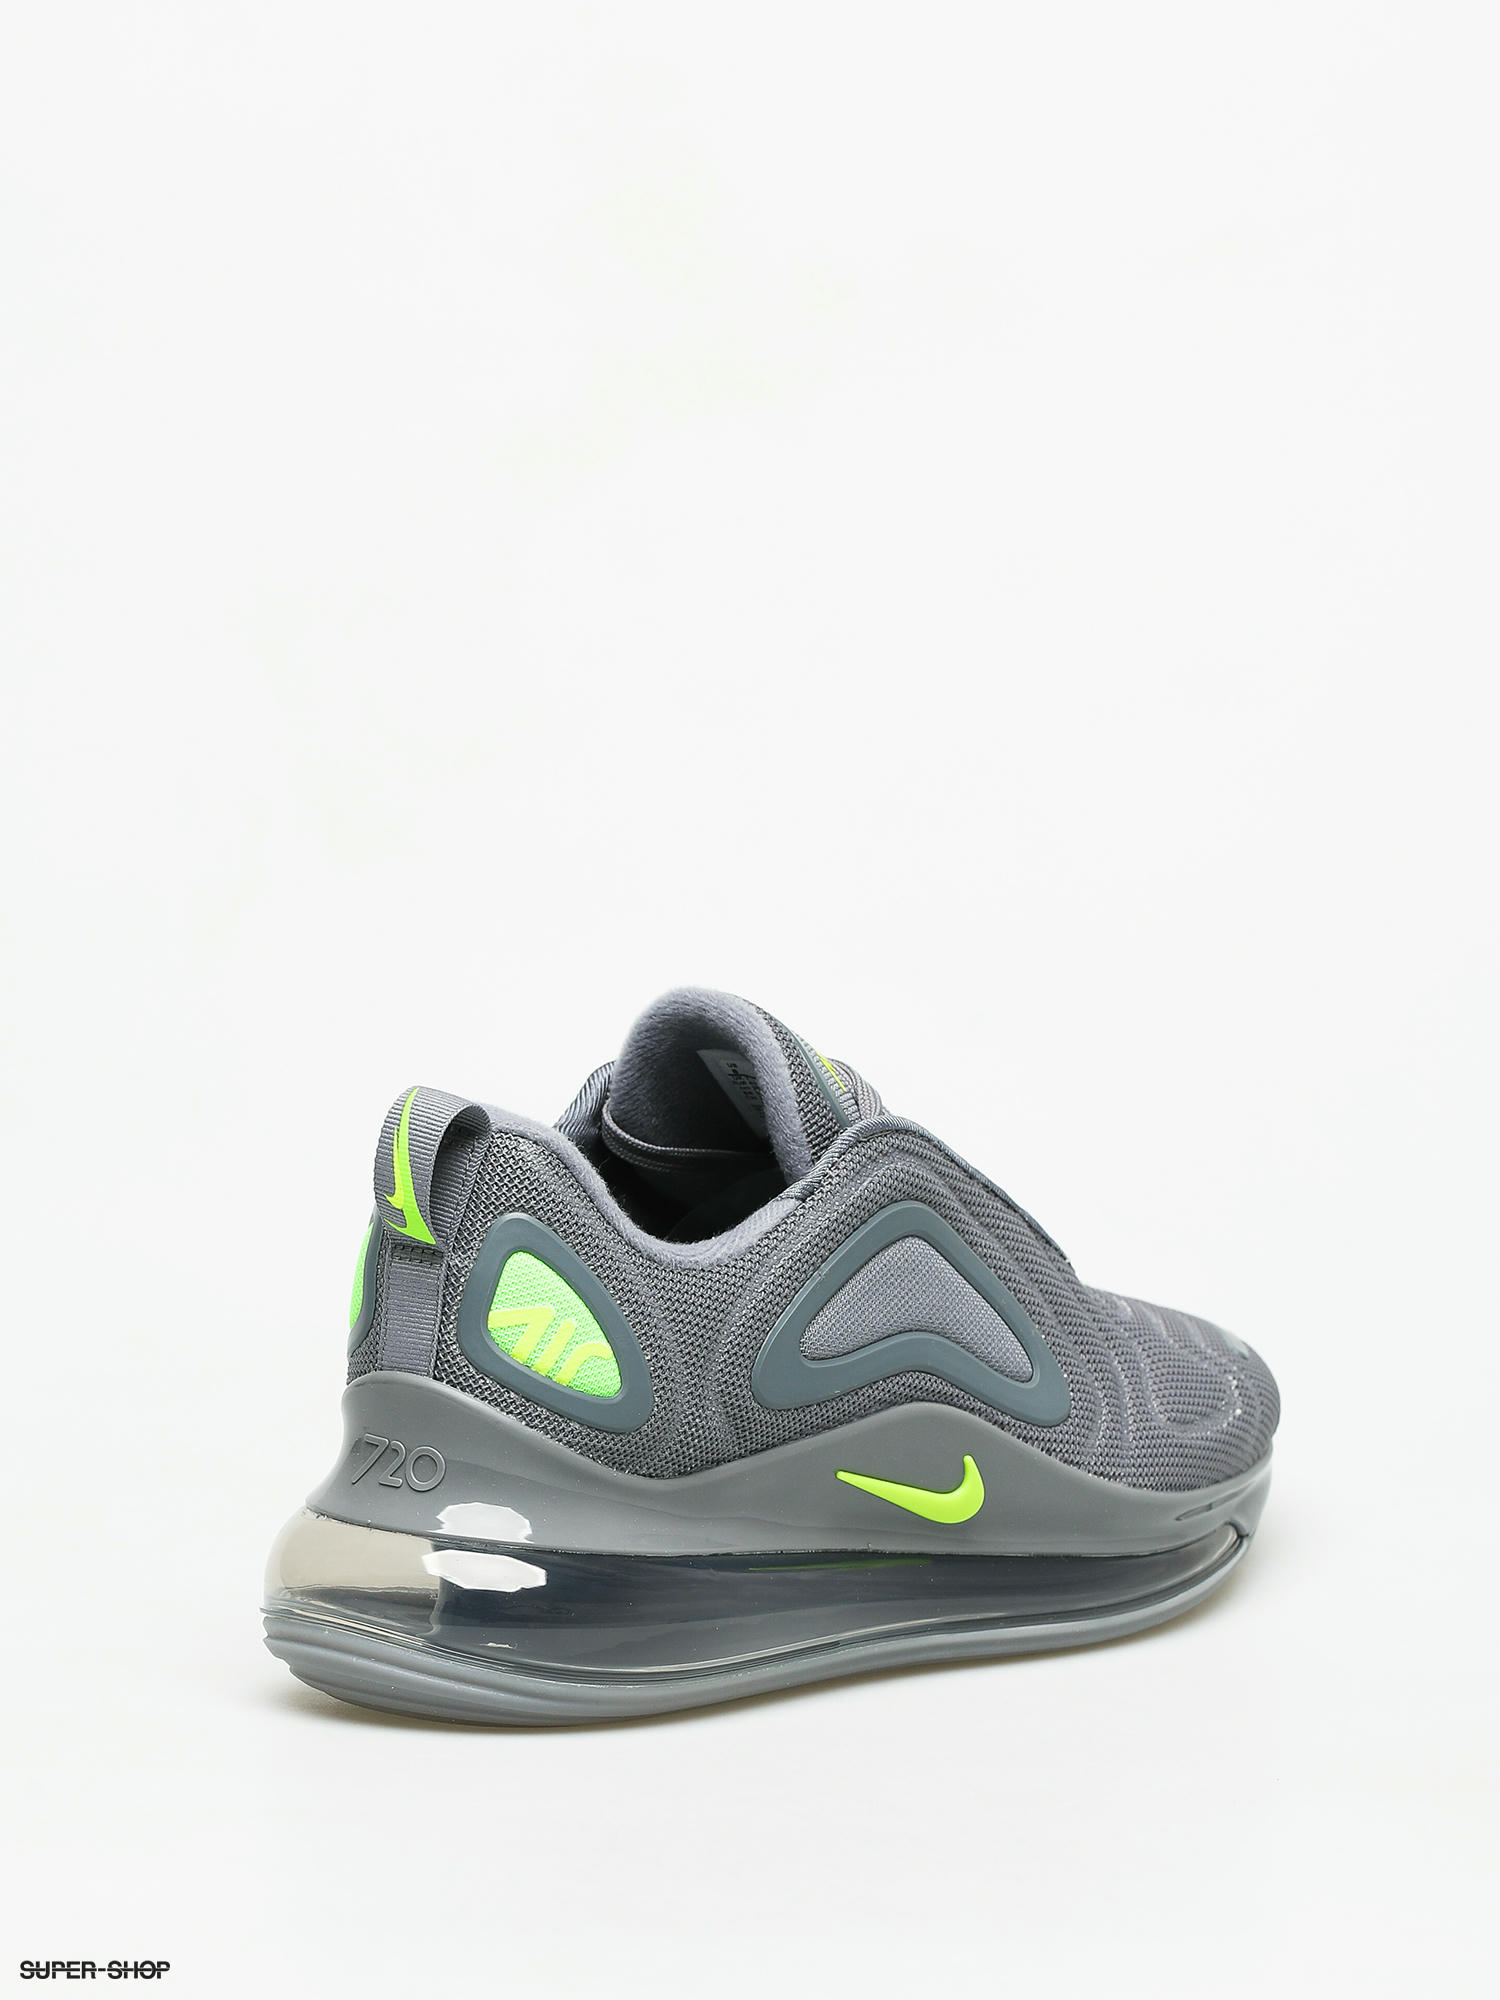 Nike Air Max 720 Running Shoes Black Volt Green AO2924-008 mens 6